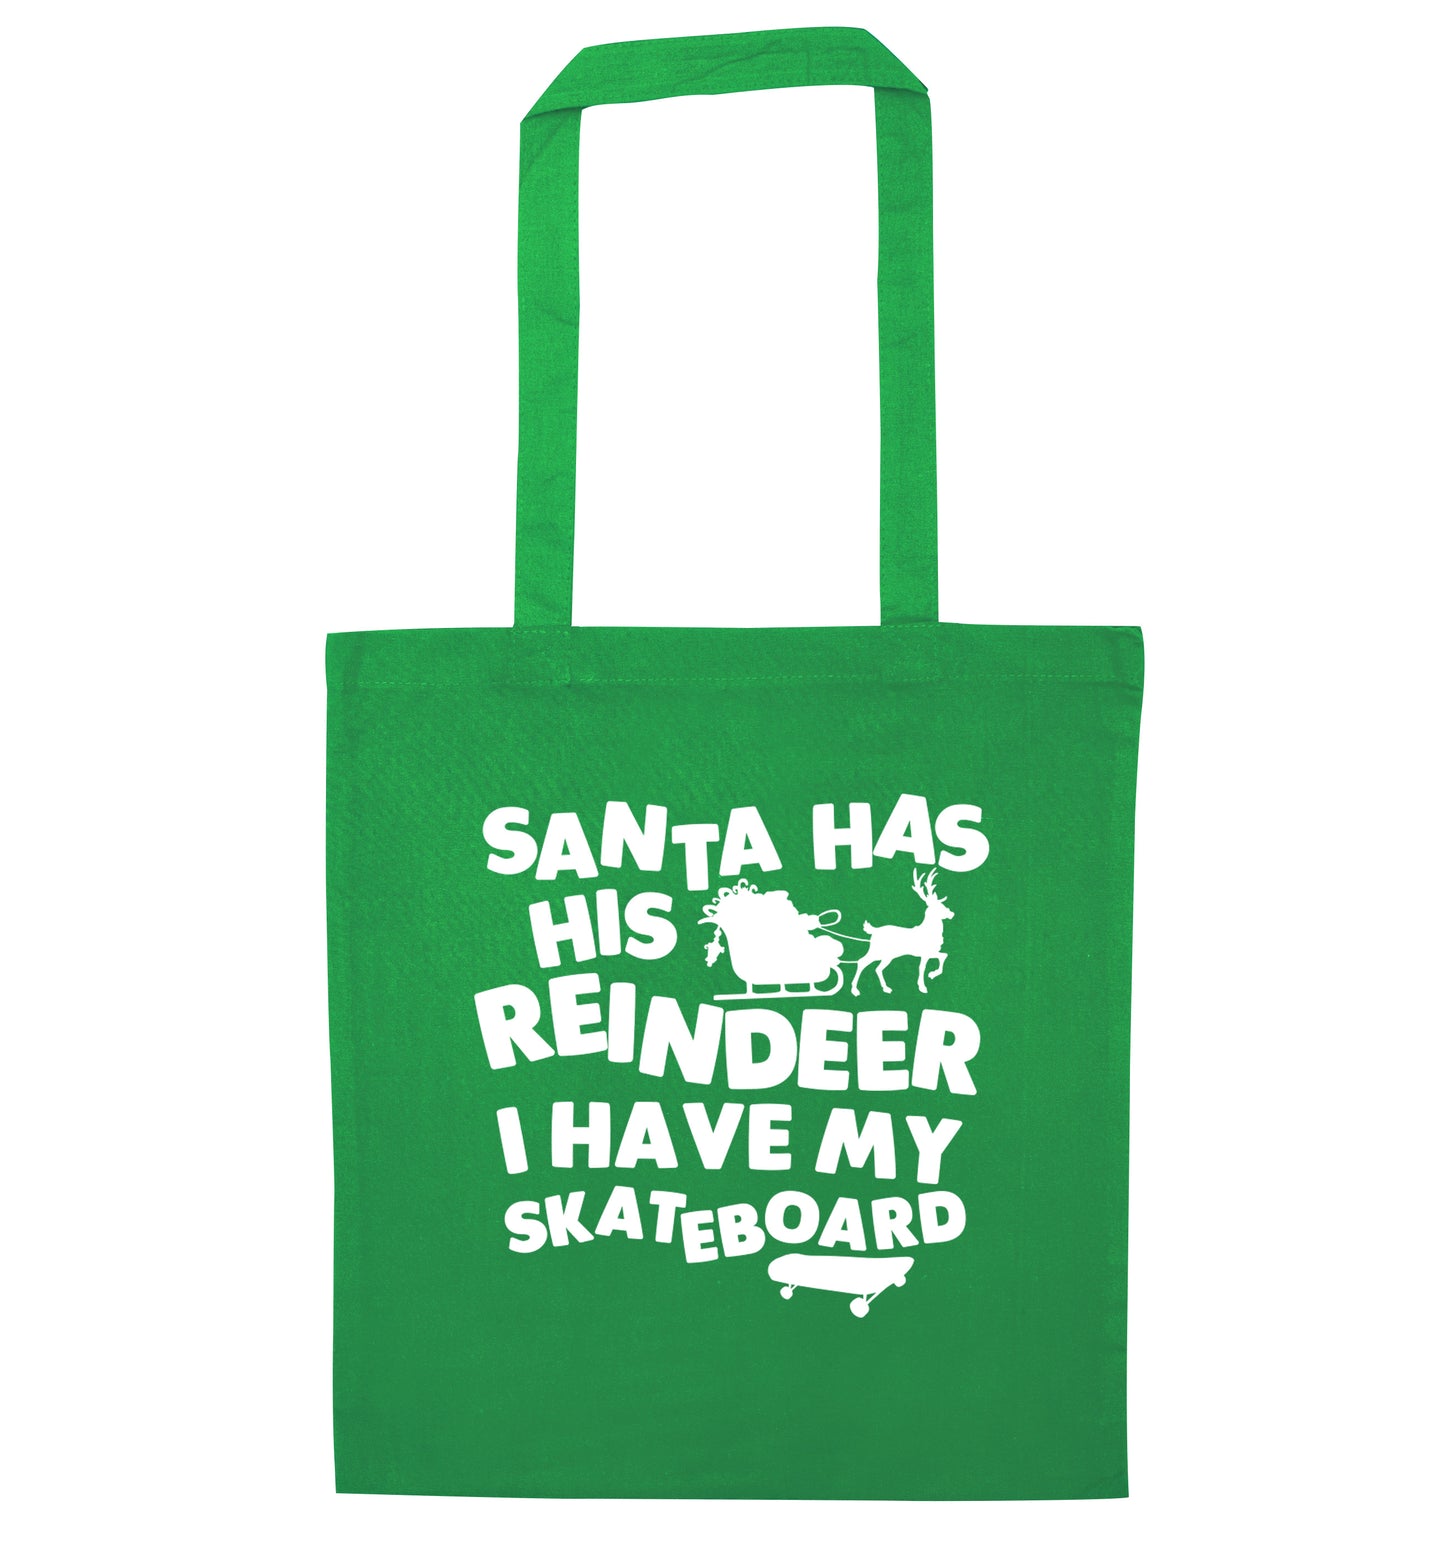 Santa has his reindeer I have my skateboard green tote bag